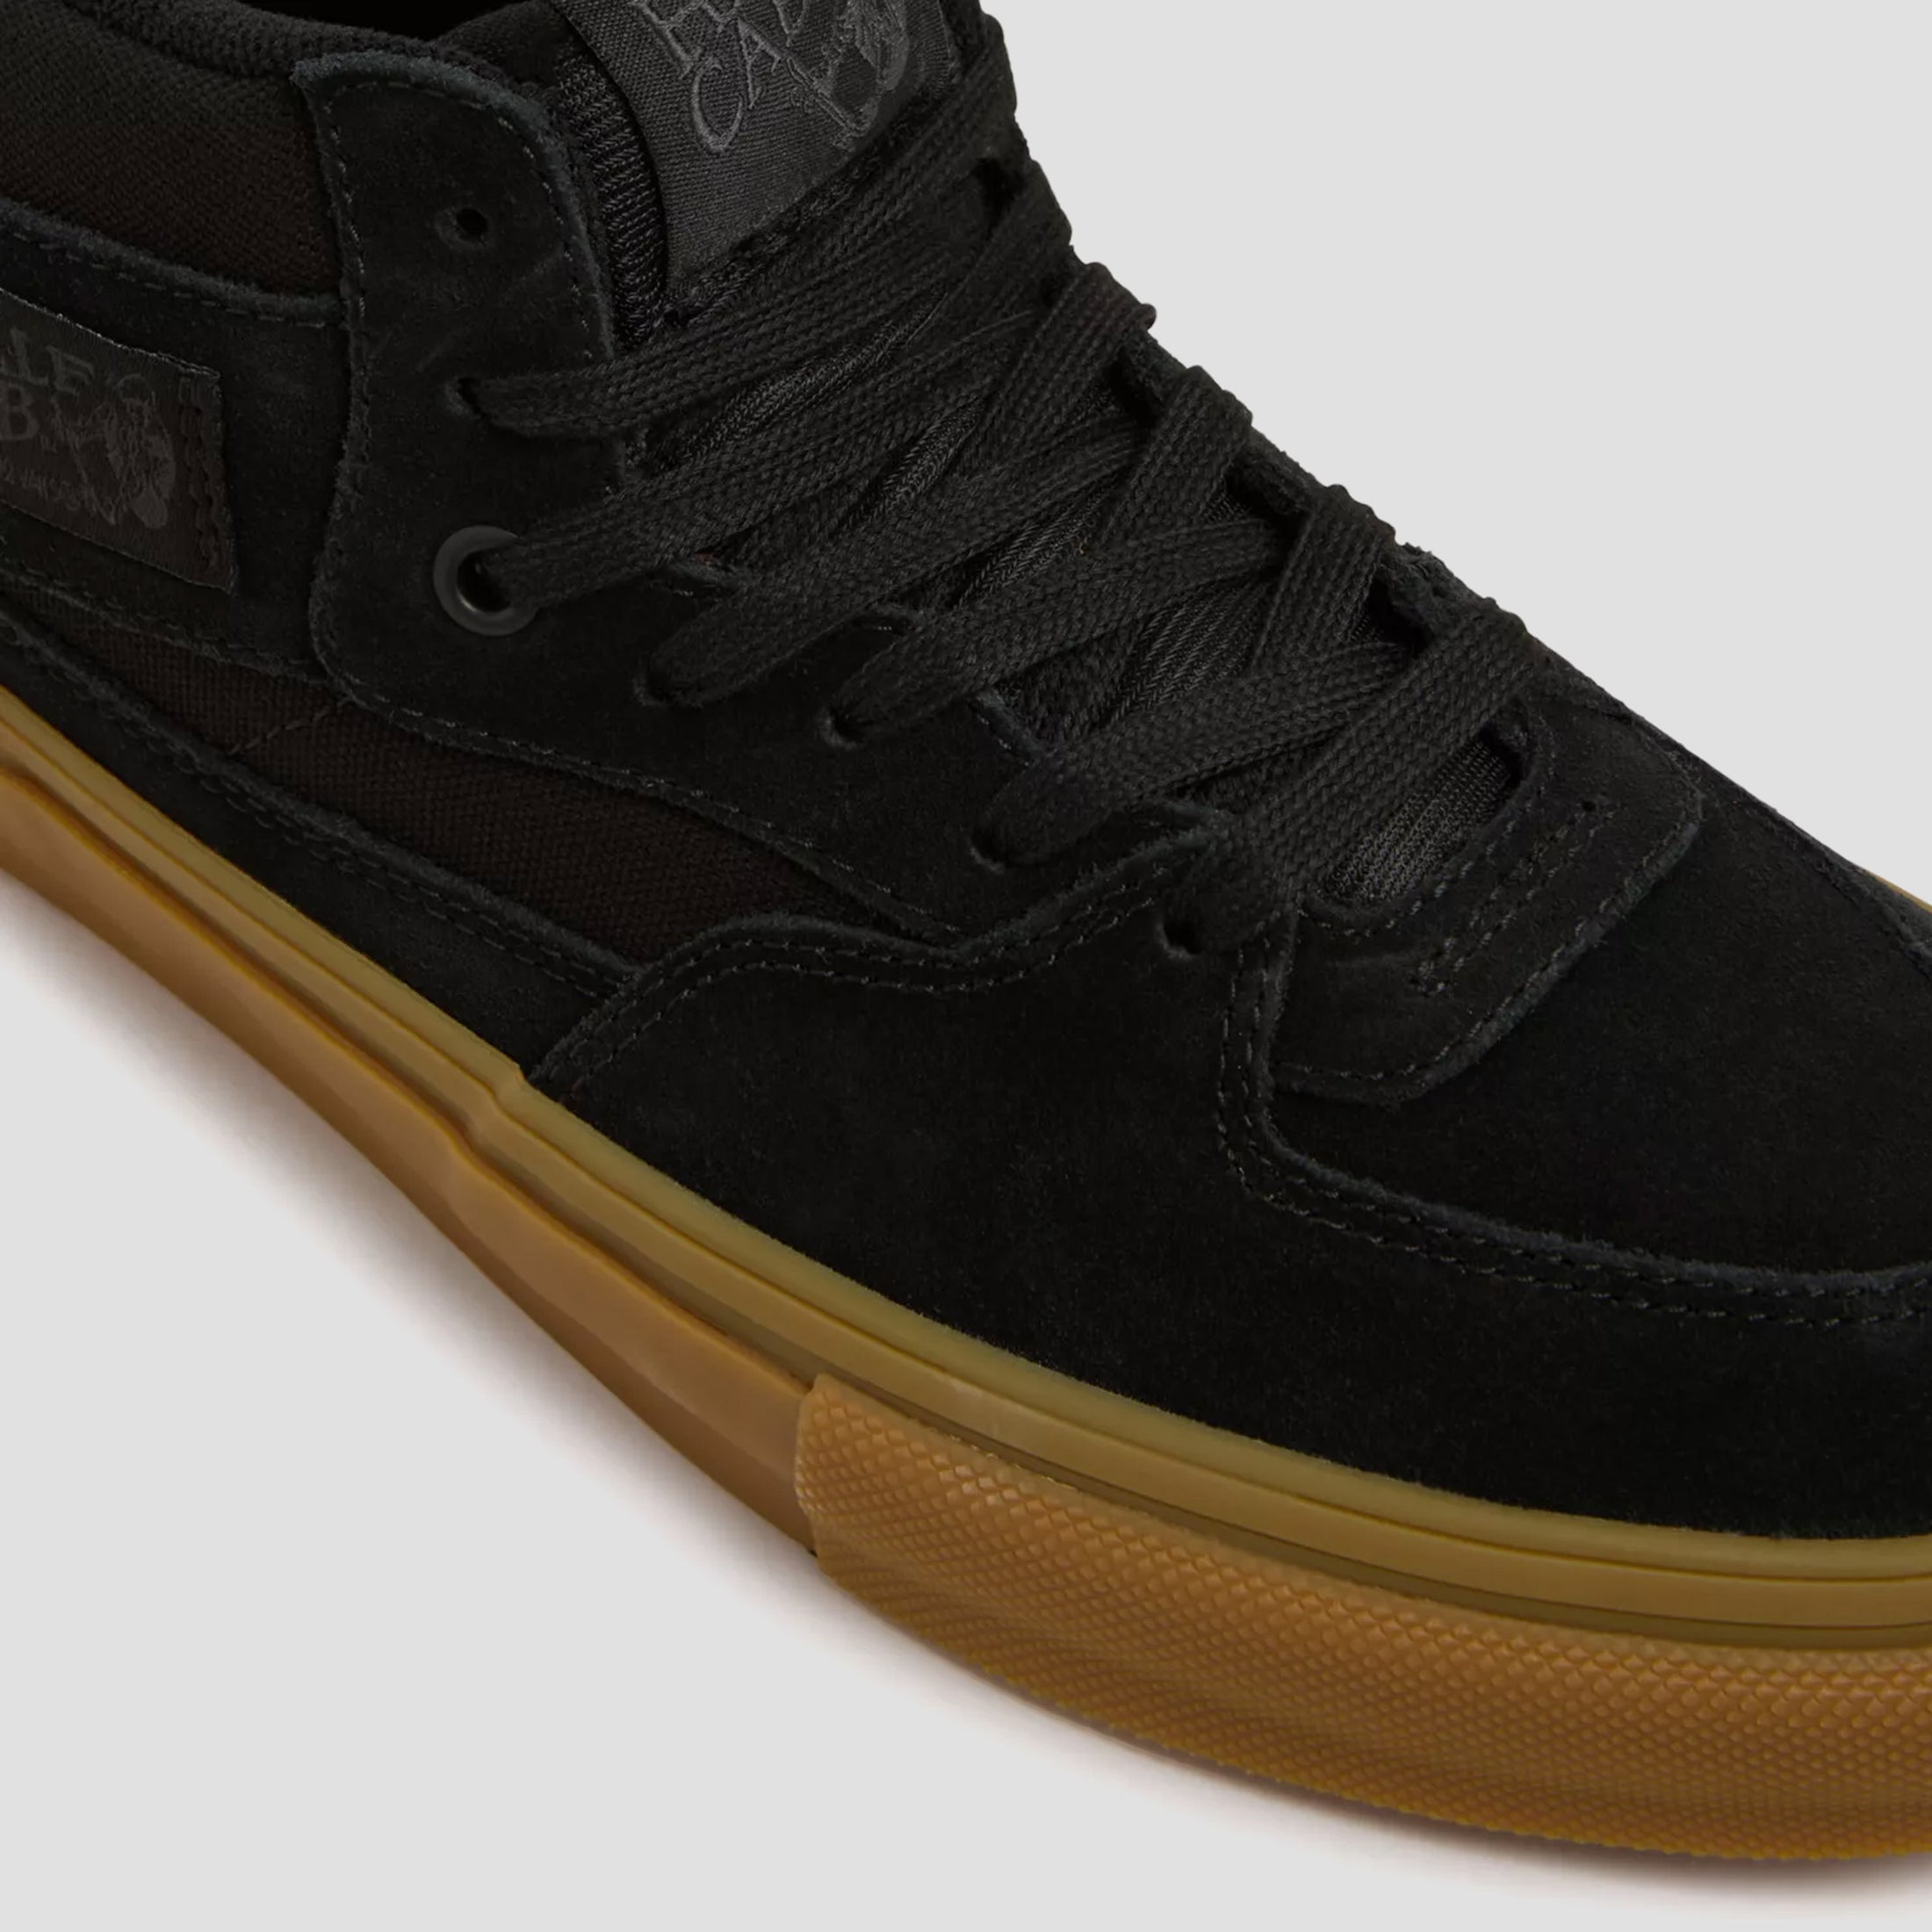 Vans Skate Half Cab Shoes Black / Gum